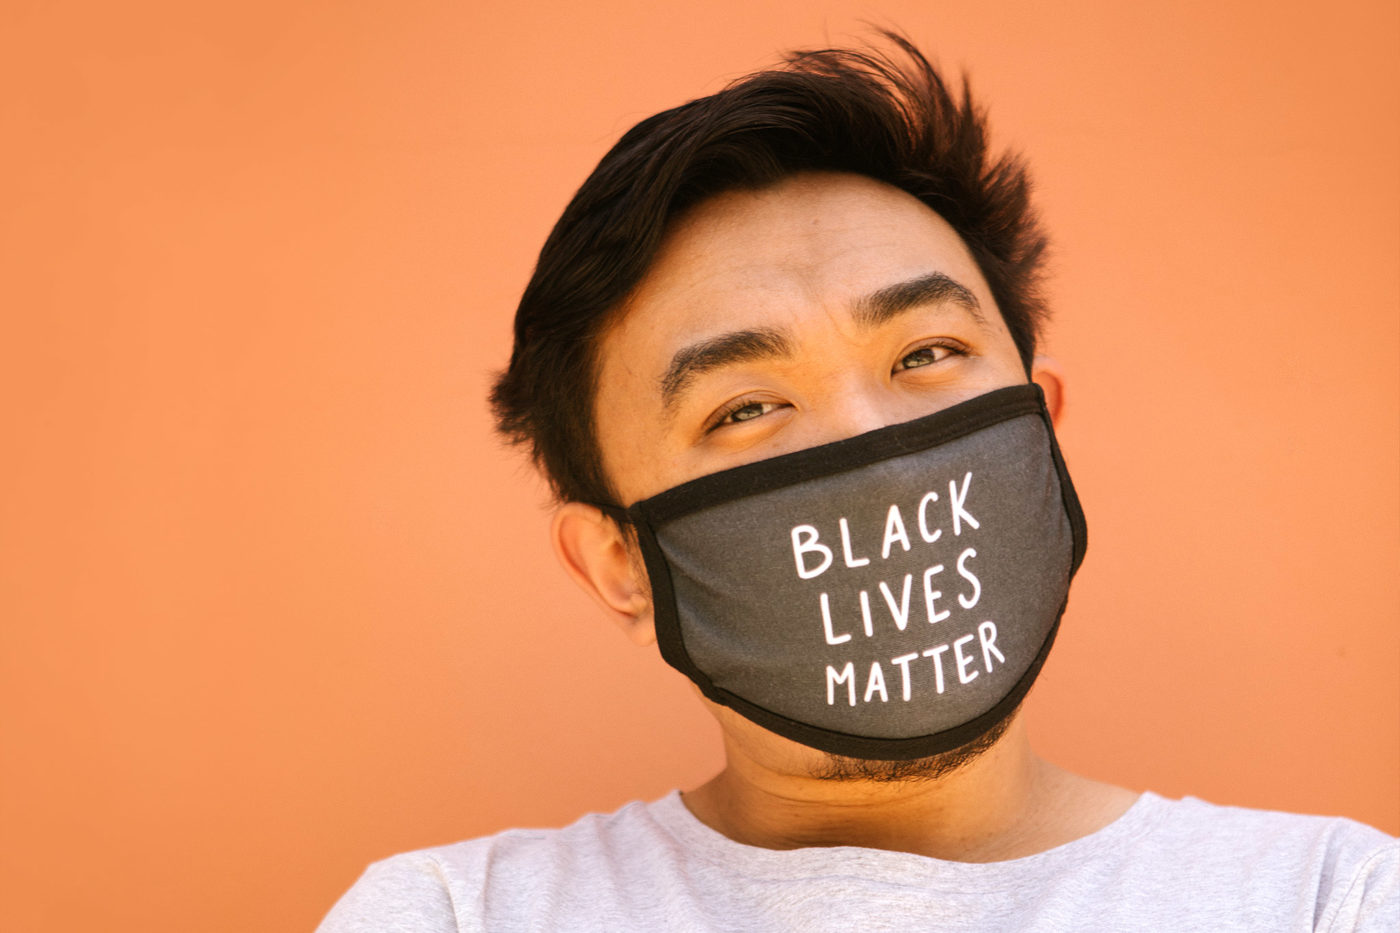 Featured Design: "Black Lives Matter" by meandthemoonn